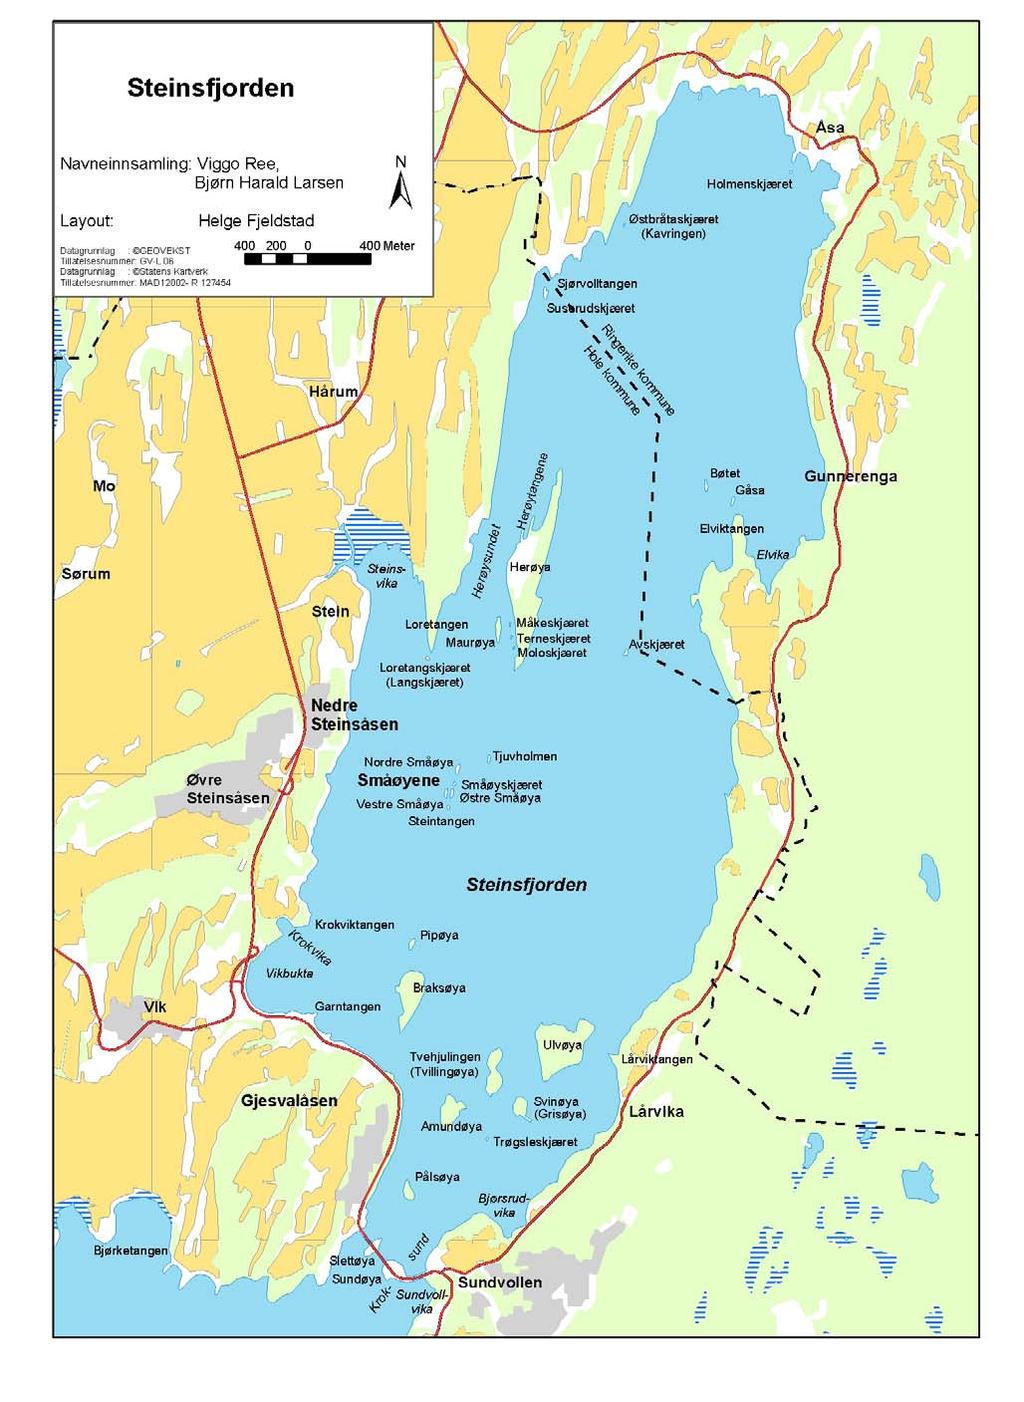 Figur 1c. Kart over Steinsfjorden.